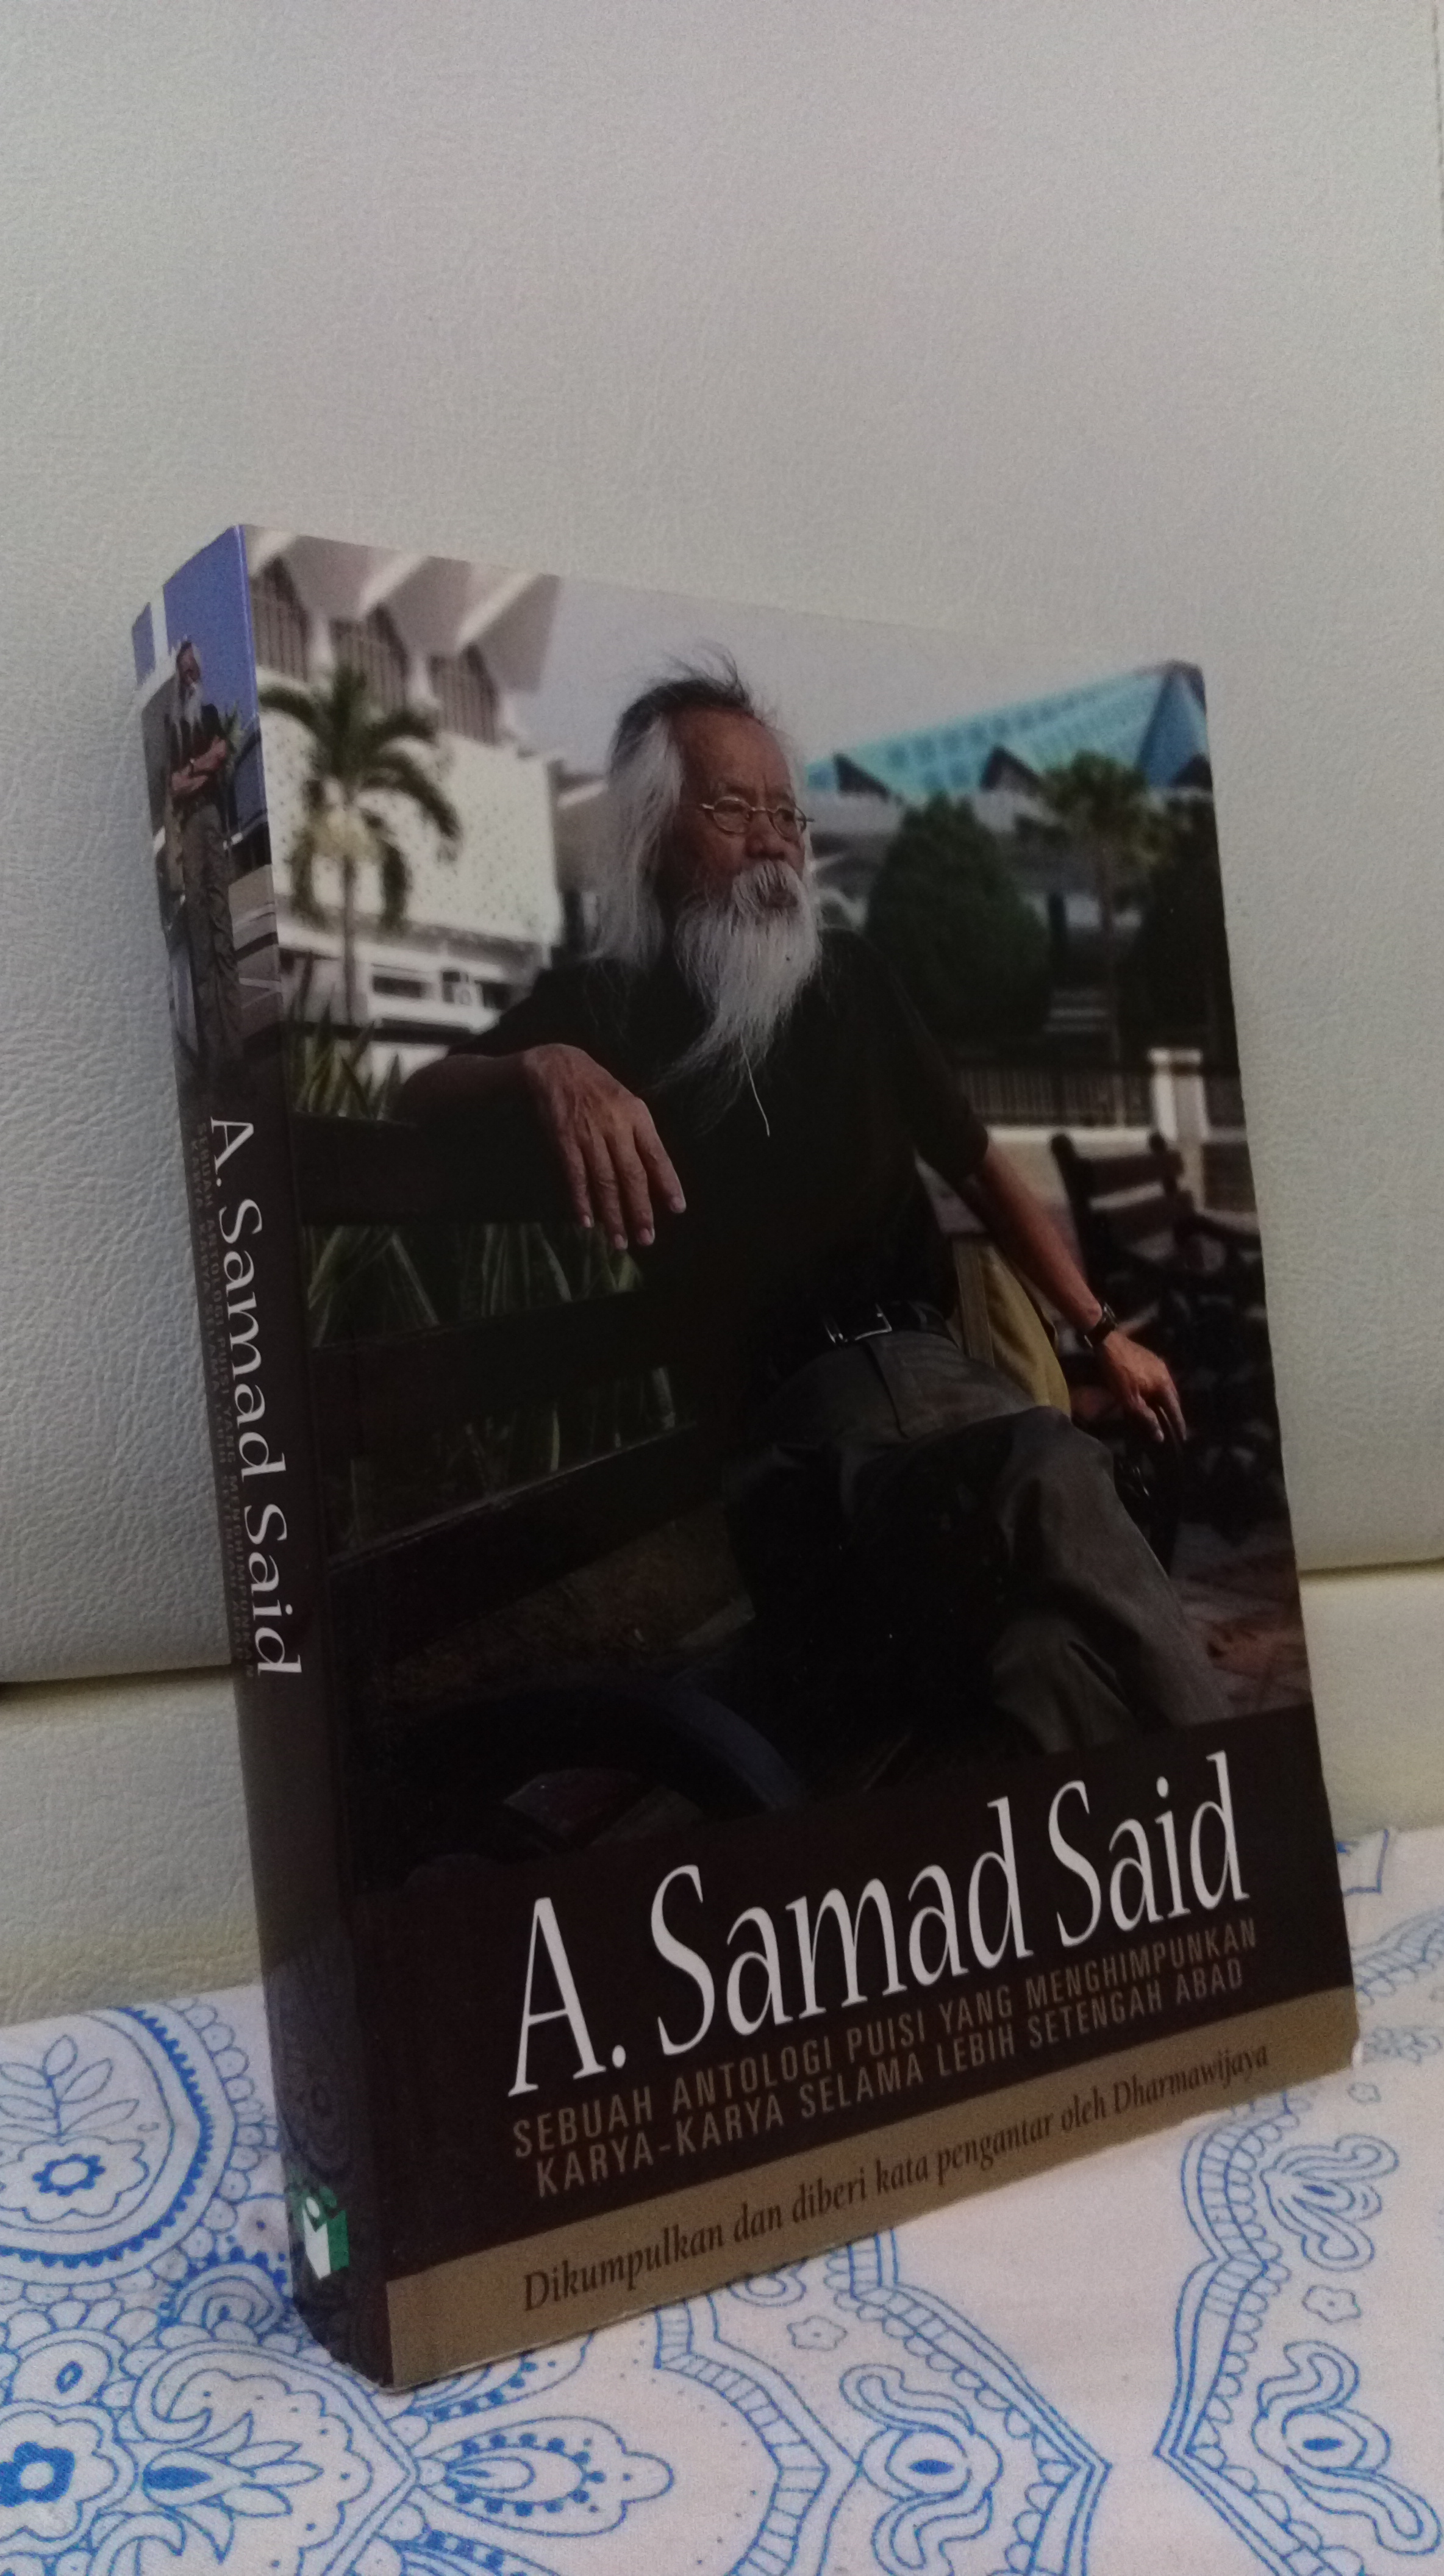 Samad said a. A Samad